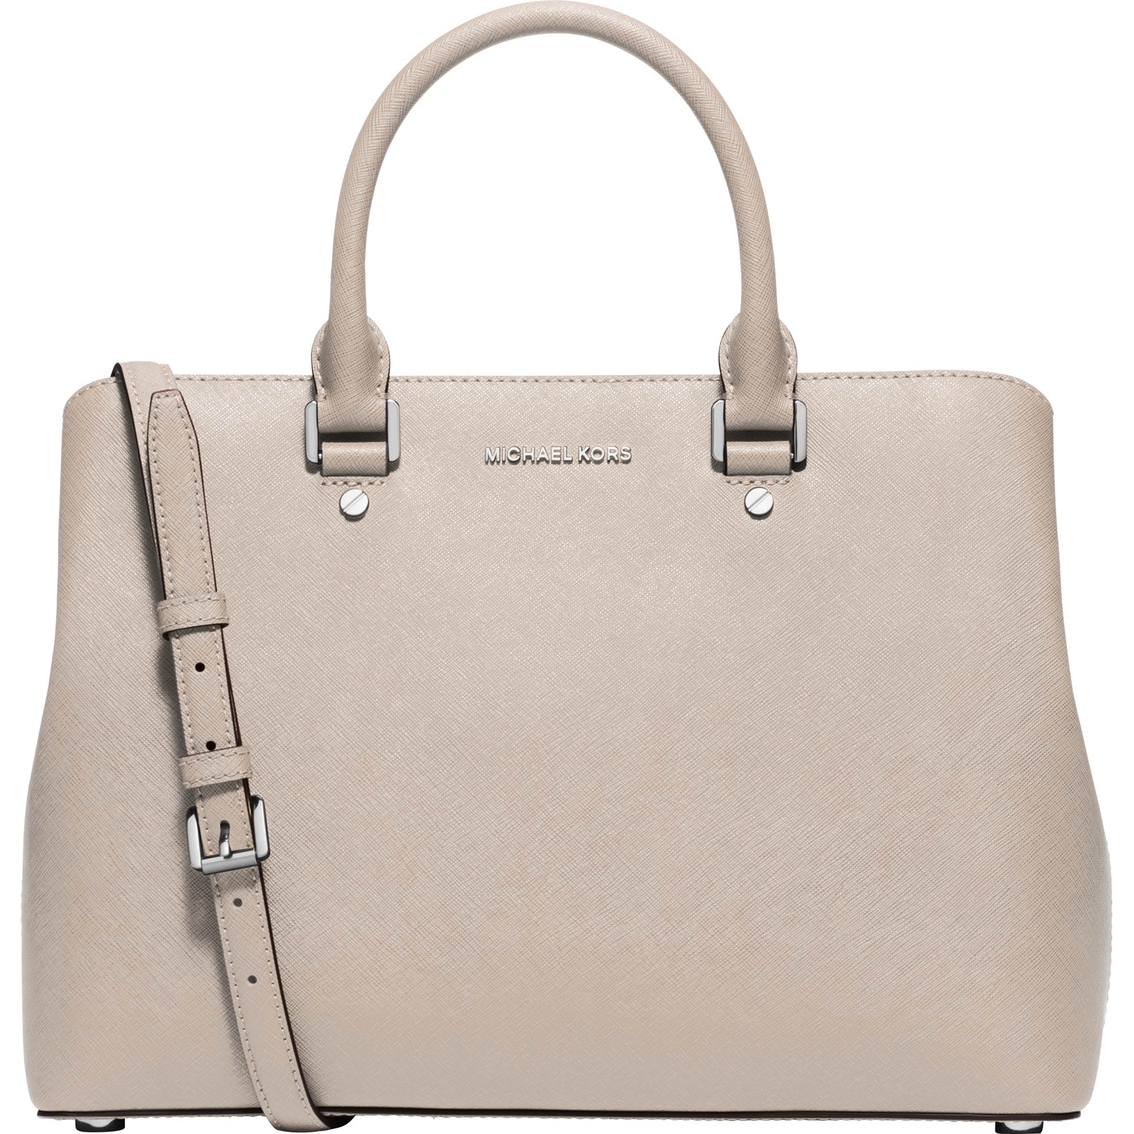 Michael Kors Savannah Large Satchel | Handbags | Shop The Exchange